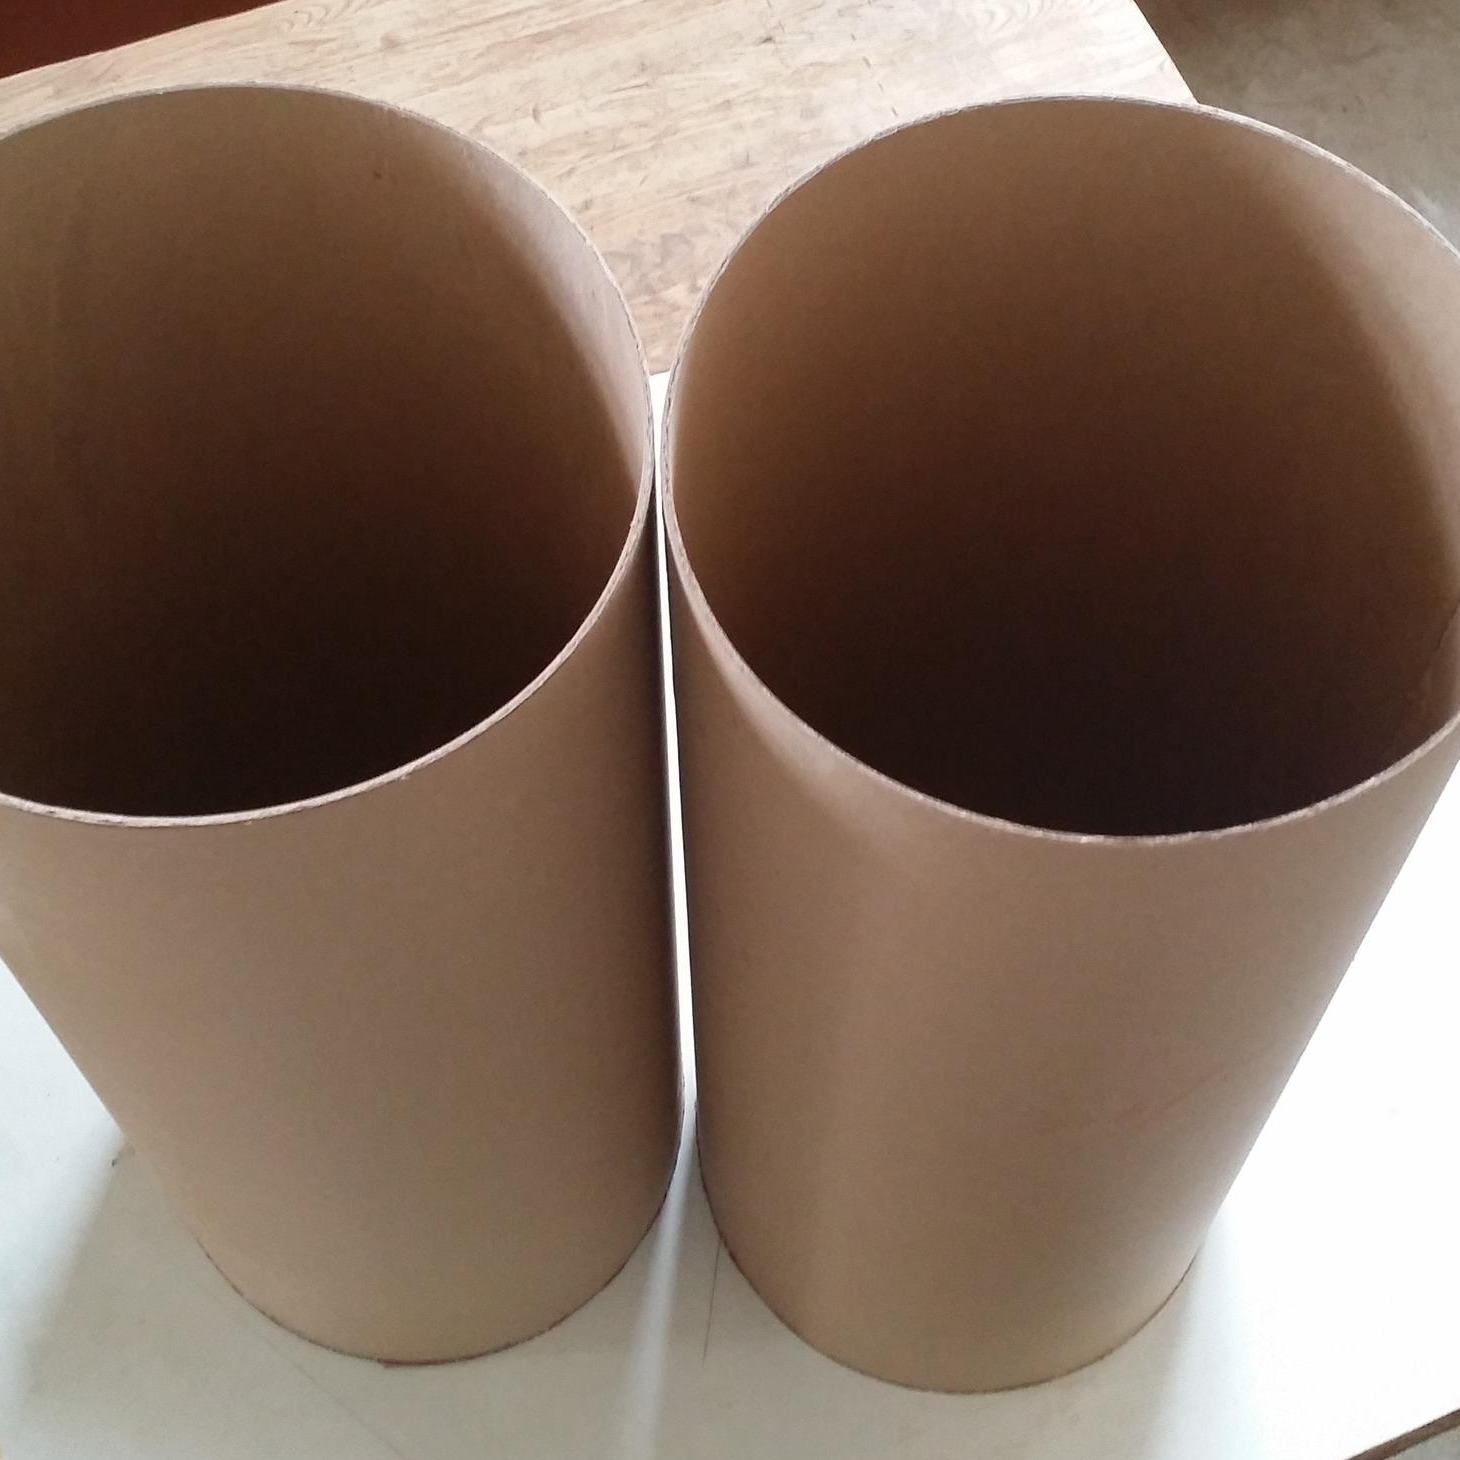 T4硬纸板筒 其他绝缘材料 绝缘材料绝缘纸筒 T4纸筒 绝缘纸板筒9